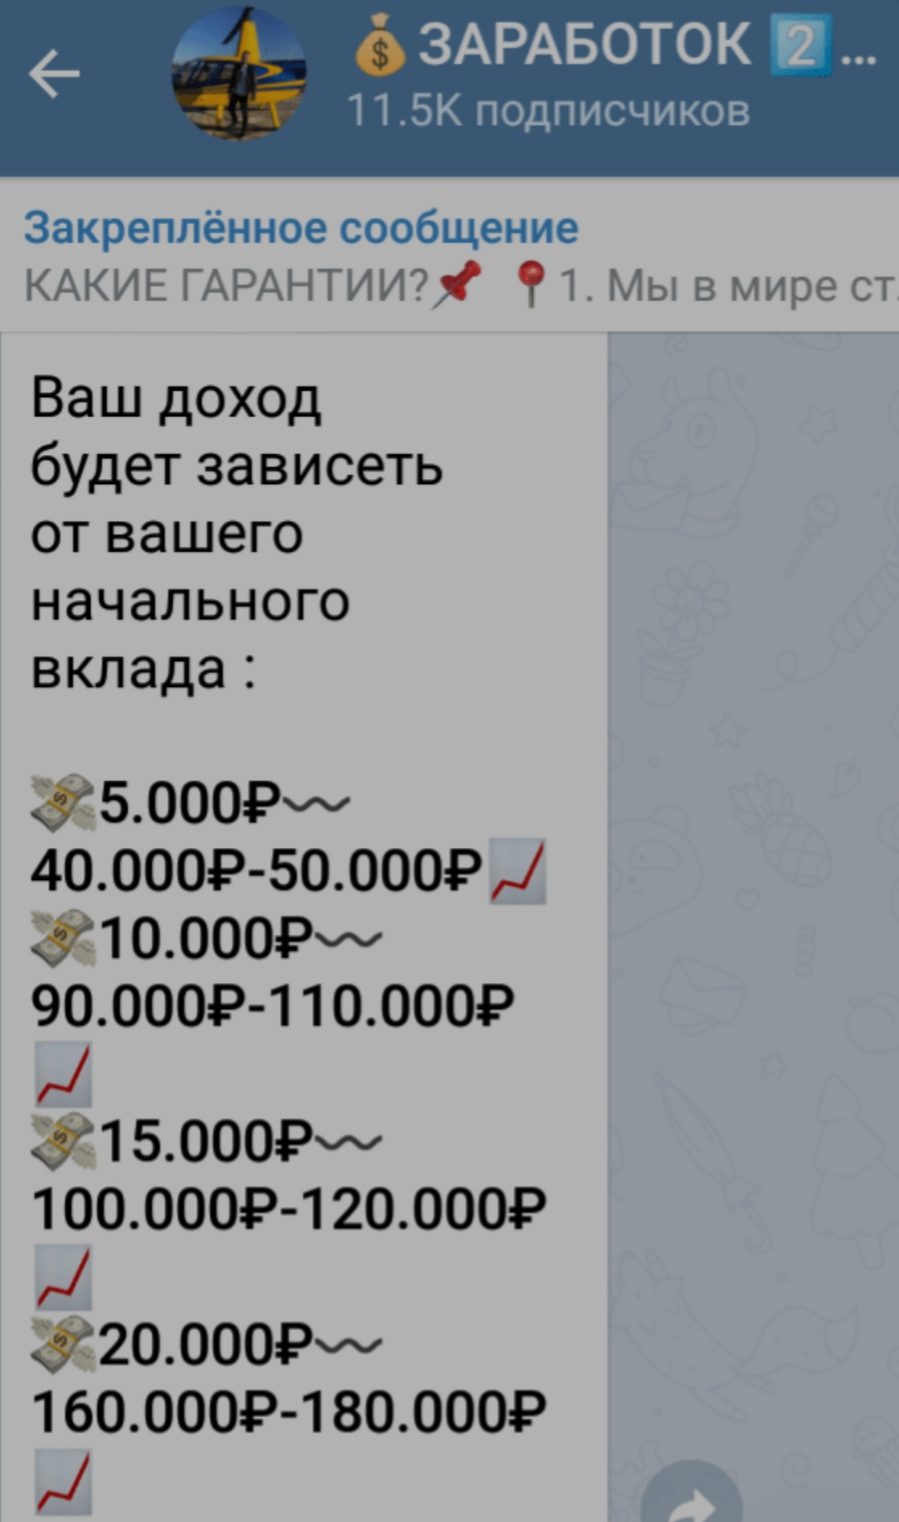 Раскрутка счета в Telegram Заработок 2021